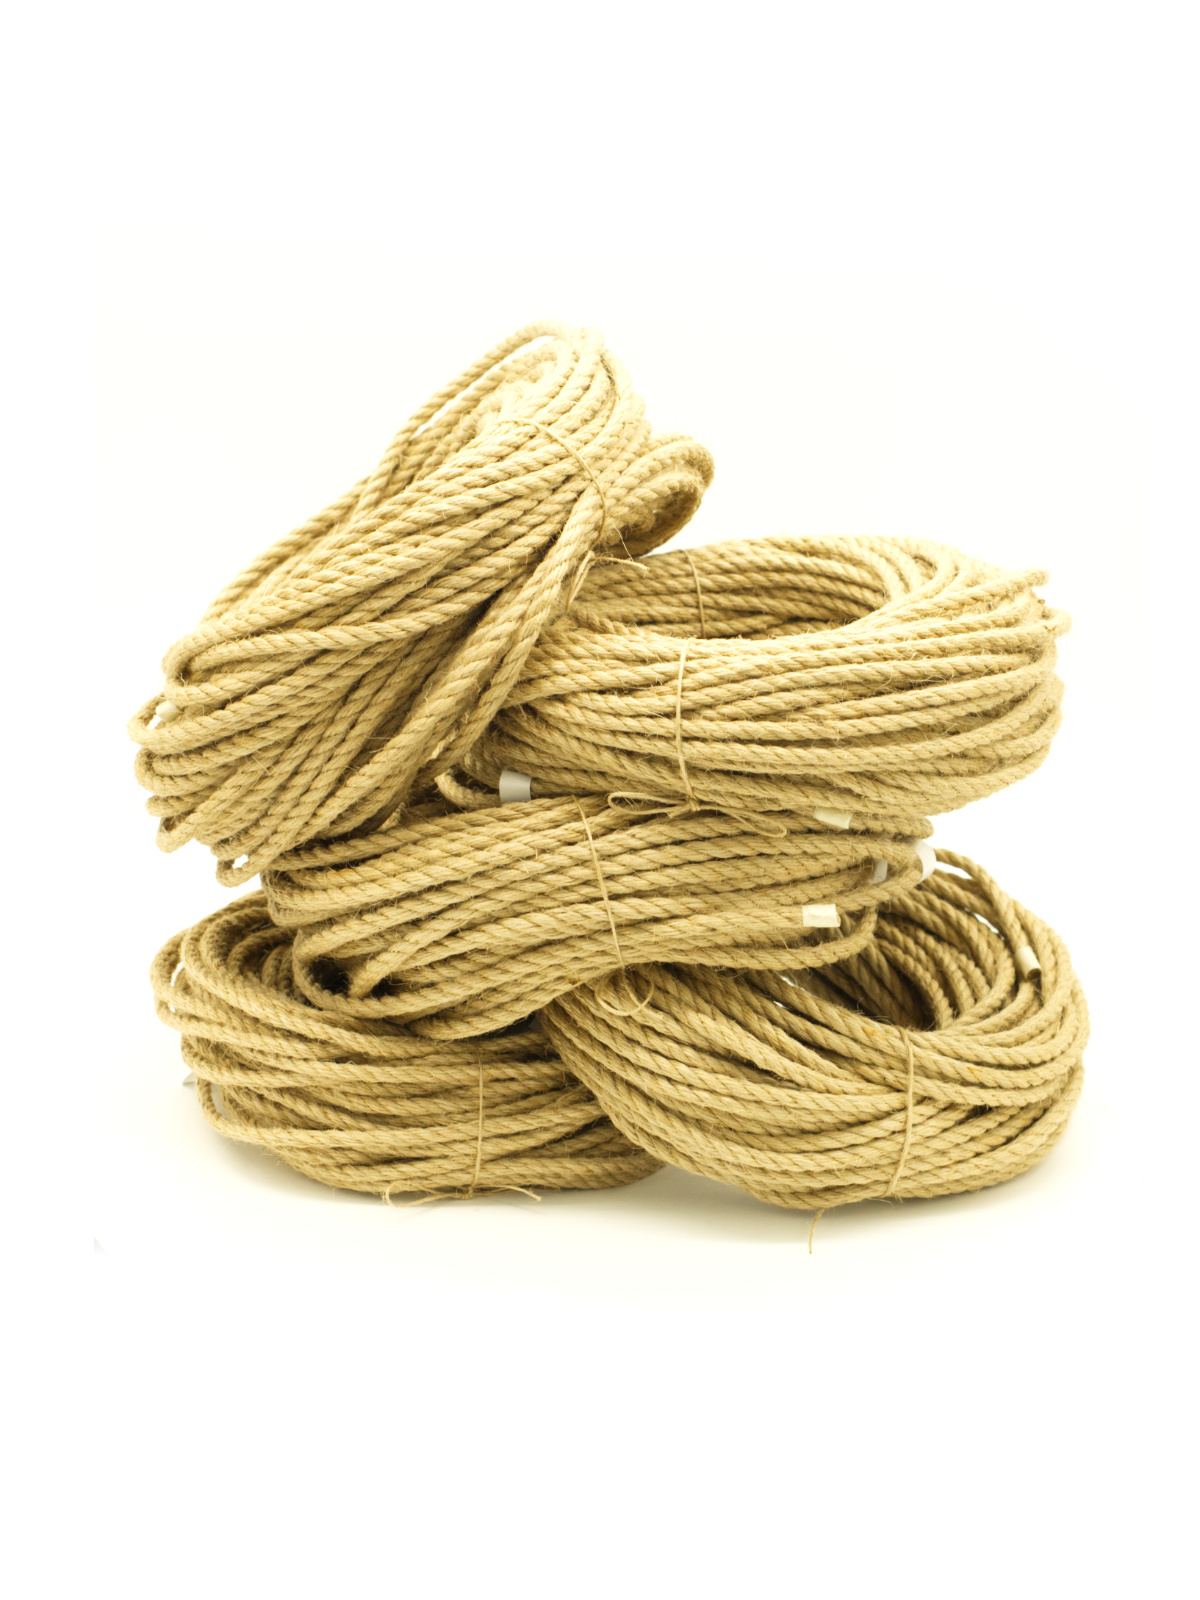 ∅ 5mm raw jute rope, AMATSUNAWA 27, JBO-free, for DIY processing